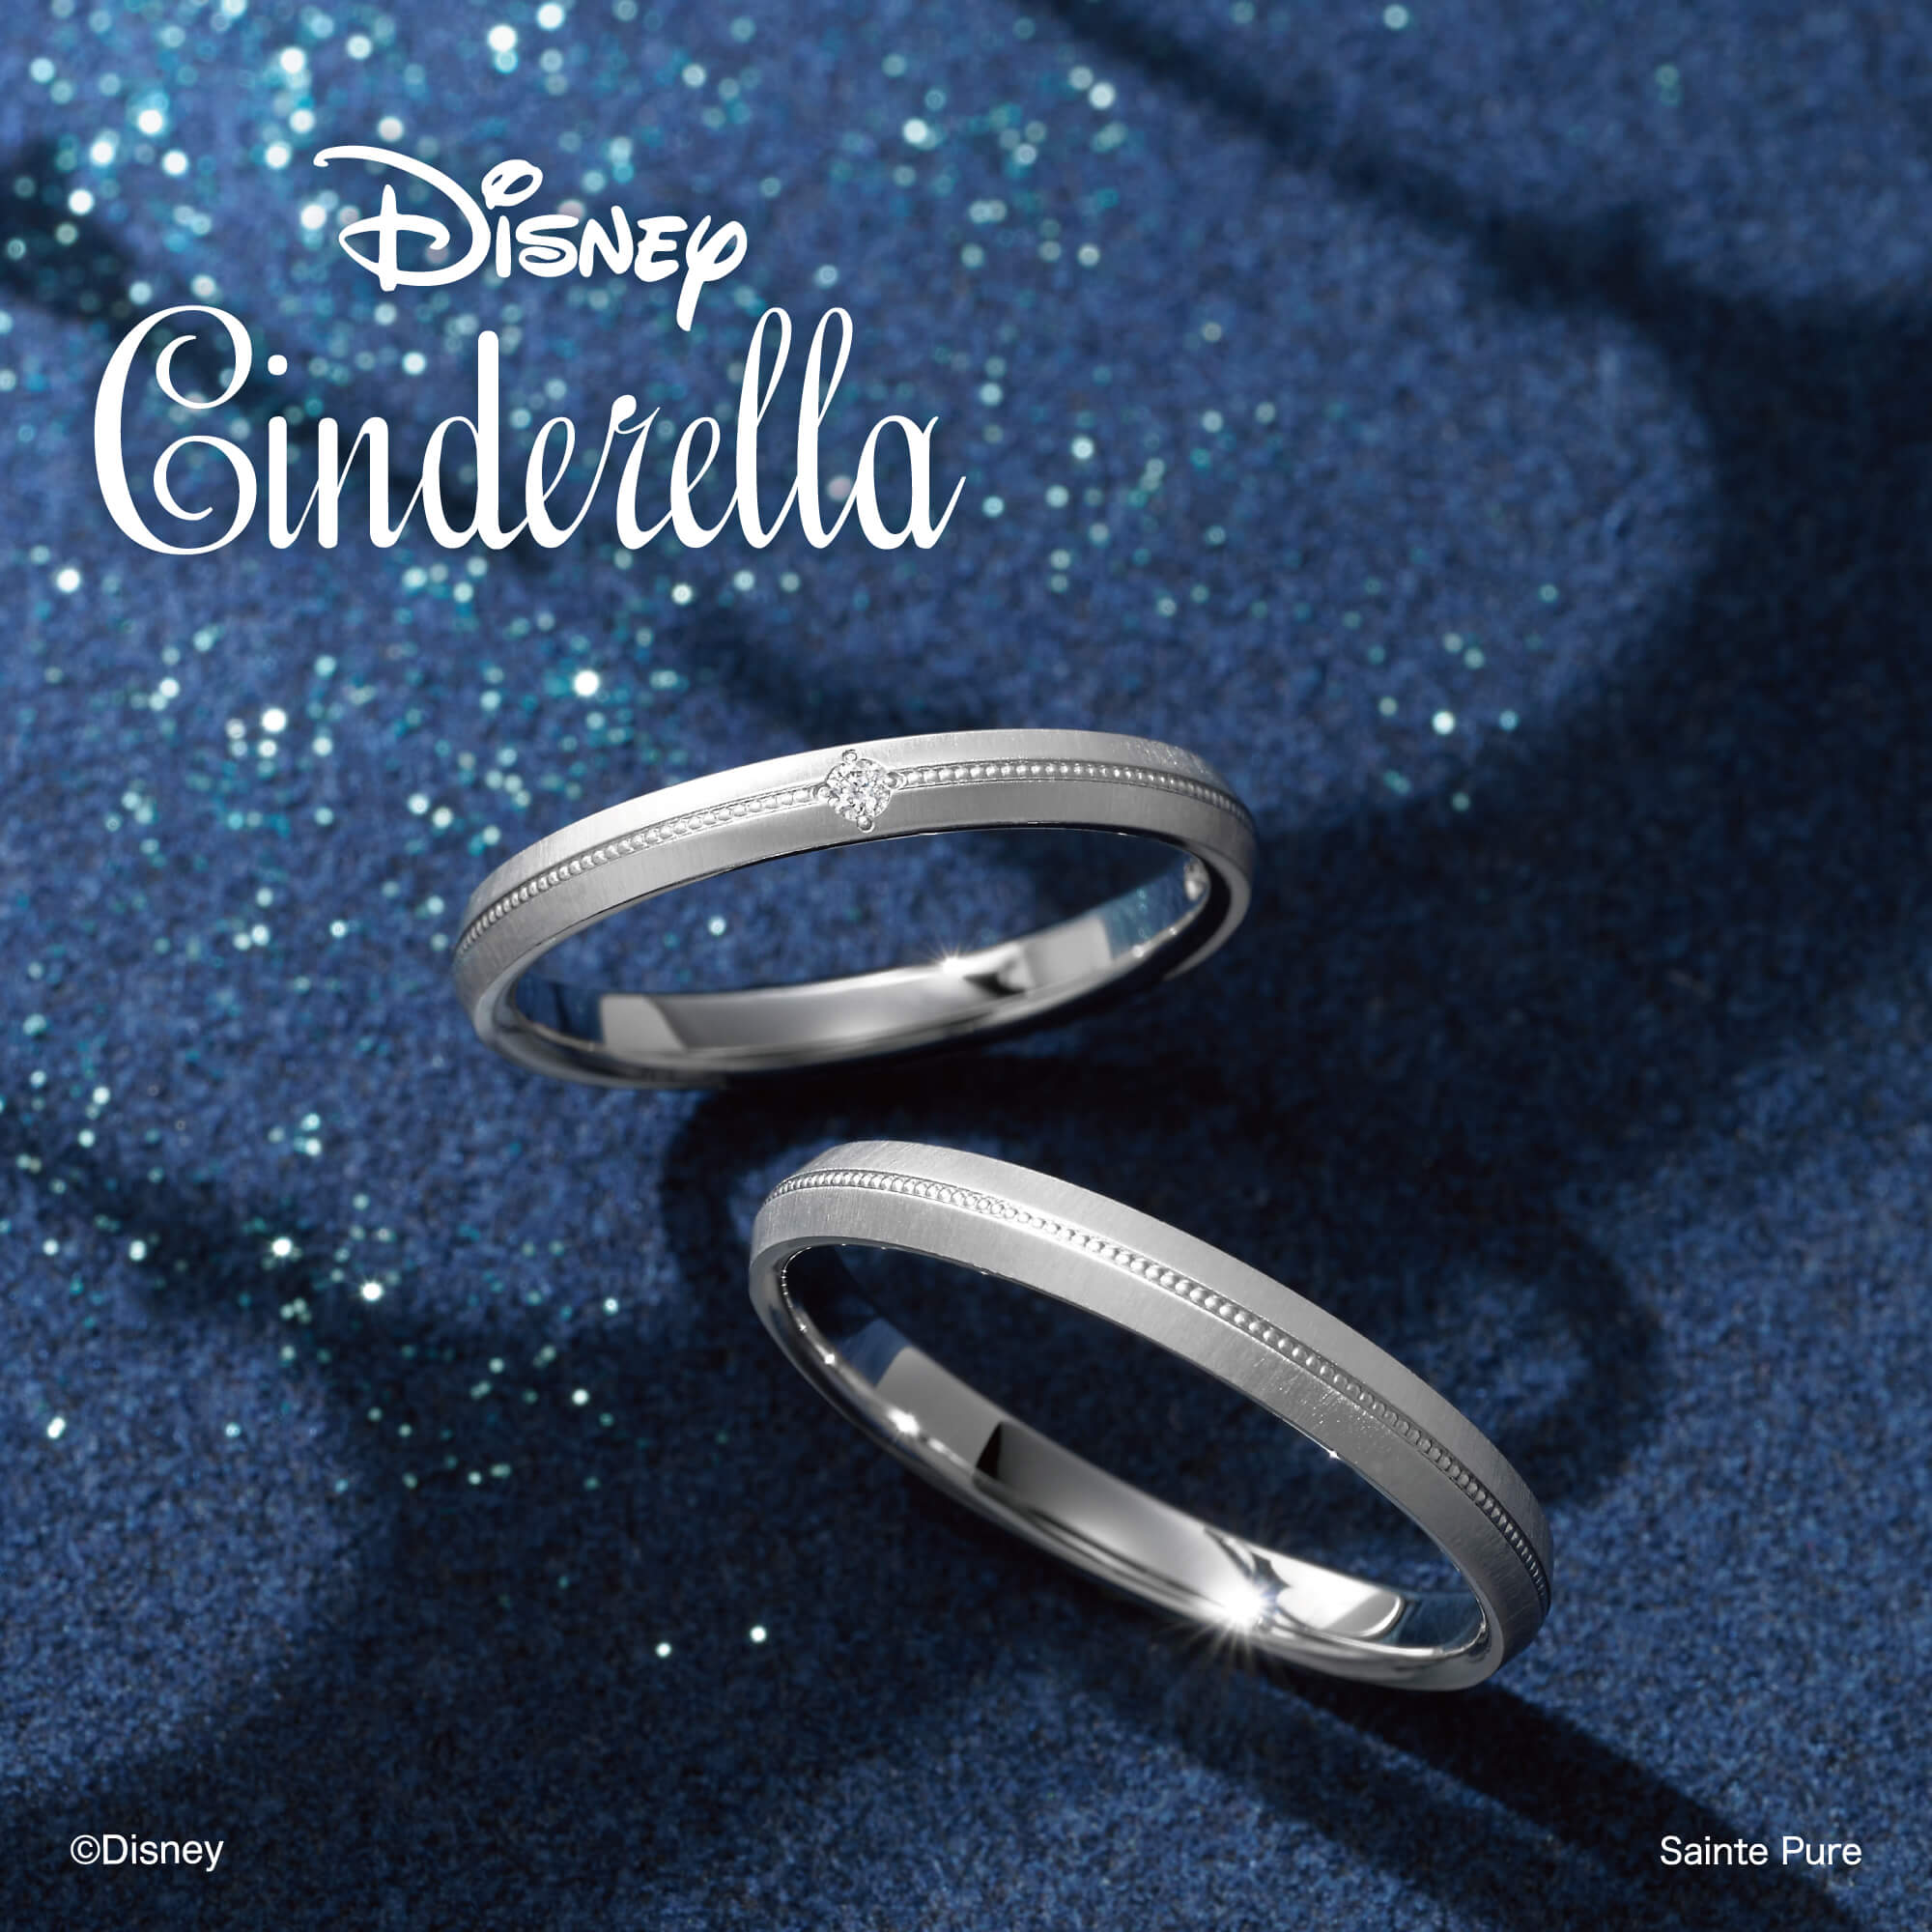 DisneyCinderellaディズニーシンデレラの結婚指輪マリッジリングMarriageringのTailoredDreamsテイラードドリームス